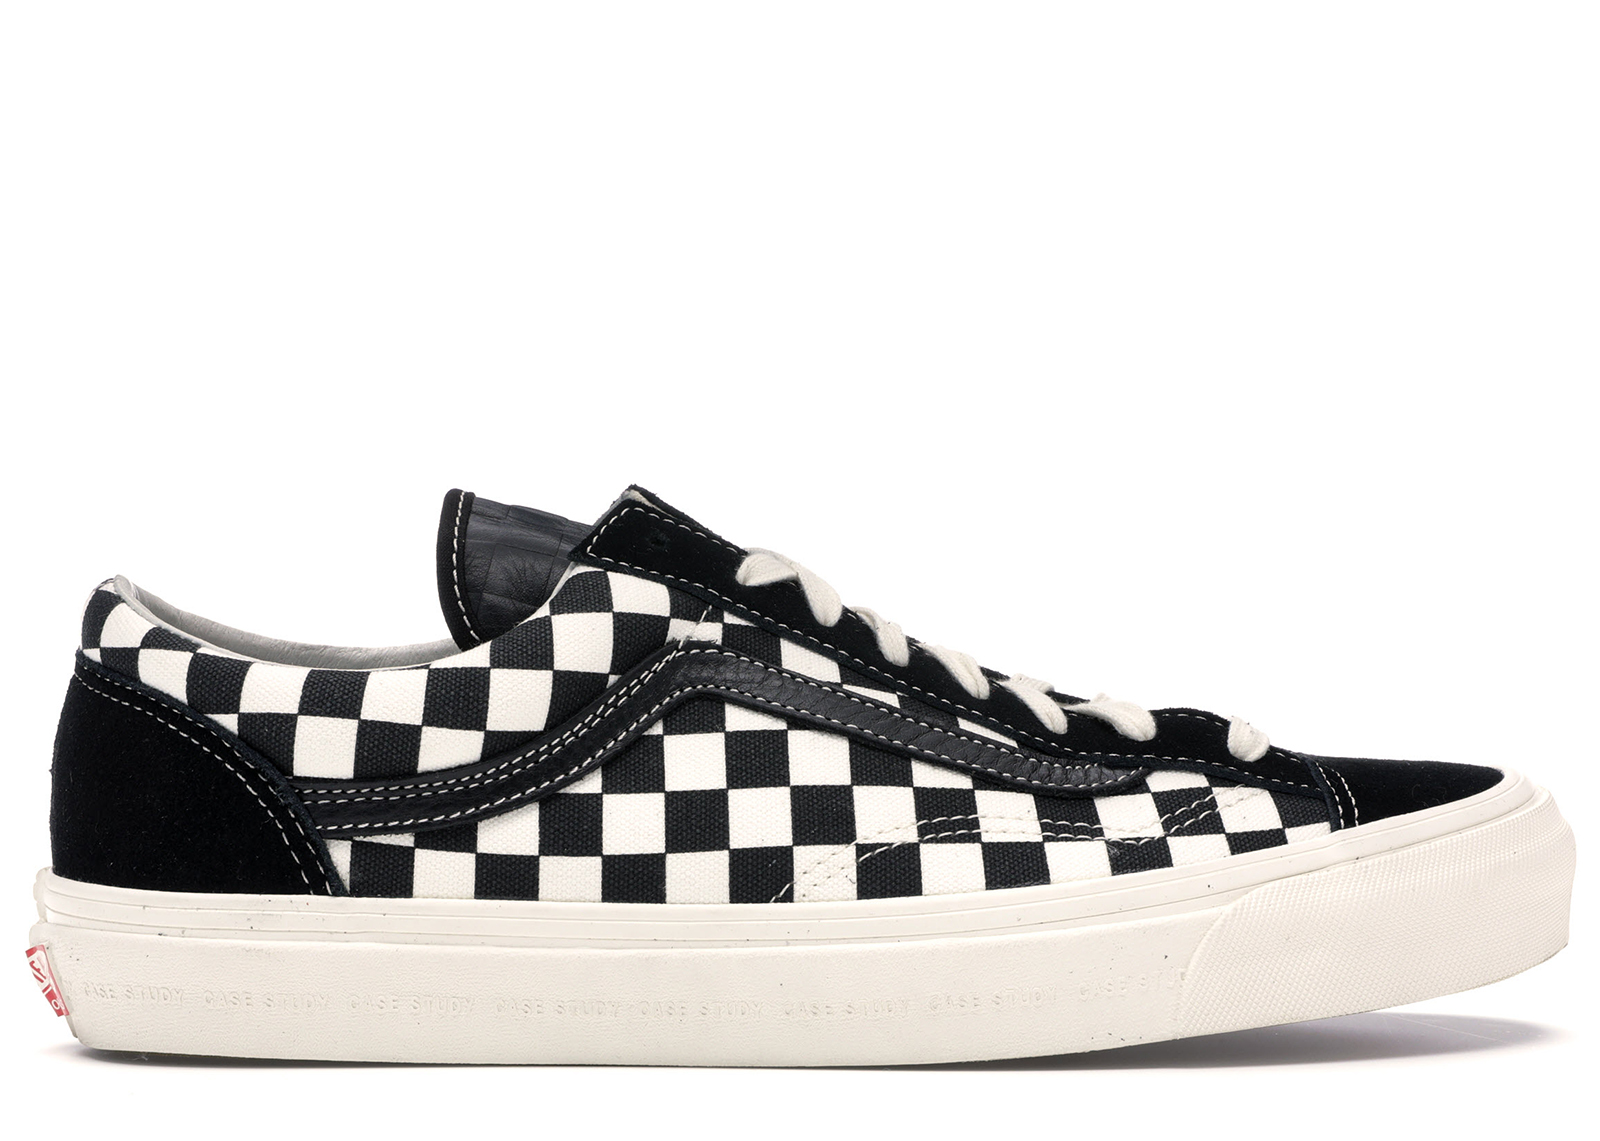 checkerboard vans fashion